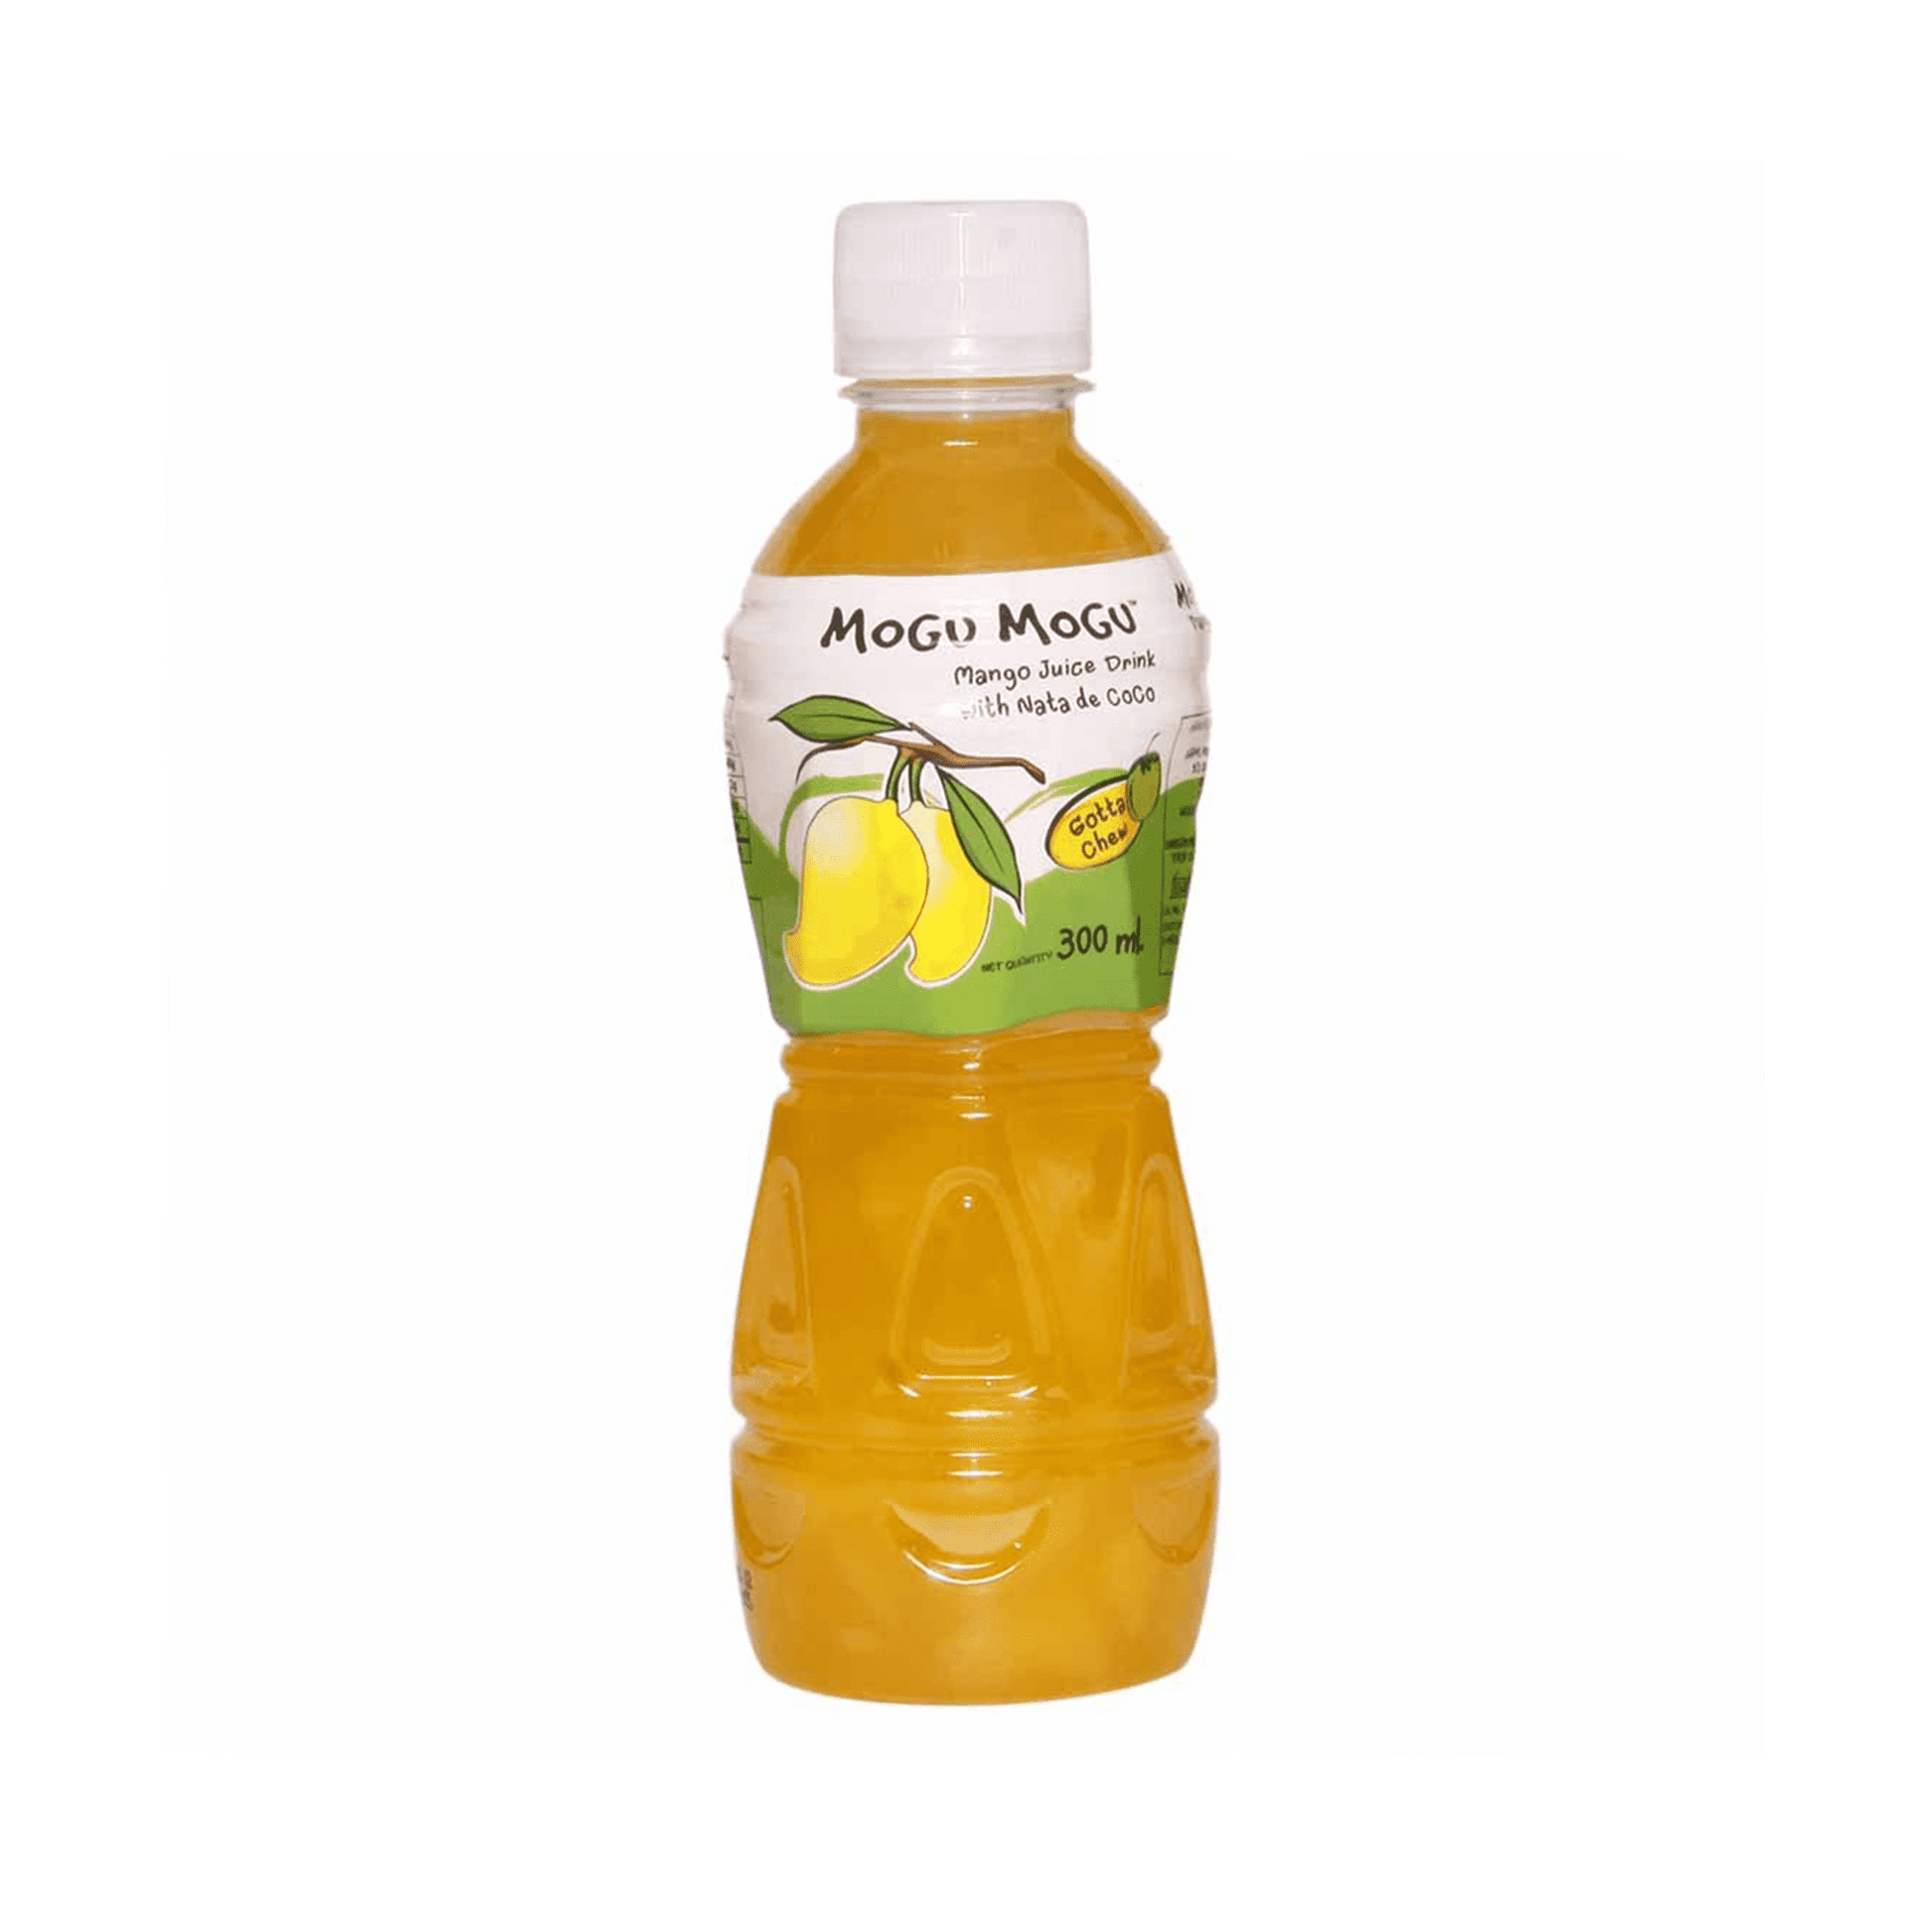 Mogu Mogu Mango Juice Drink.